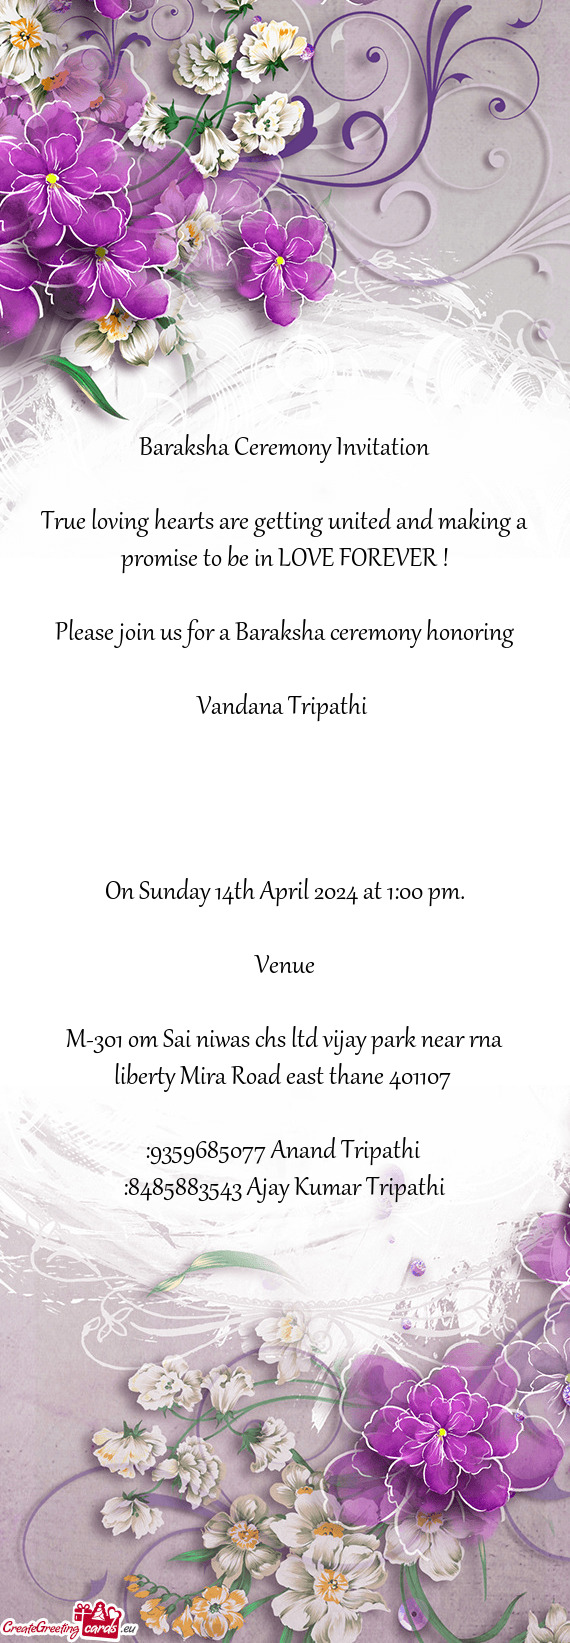 Please join us for a Baraksha ceremony honoring